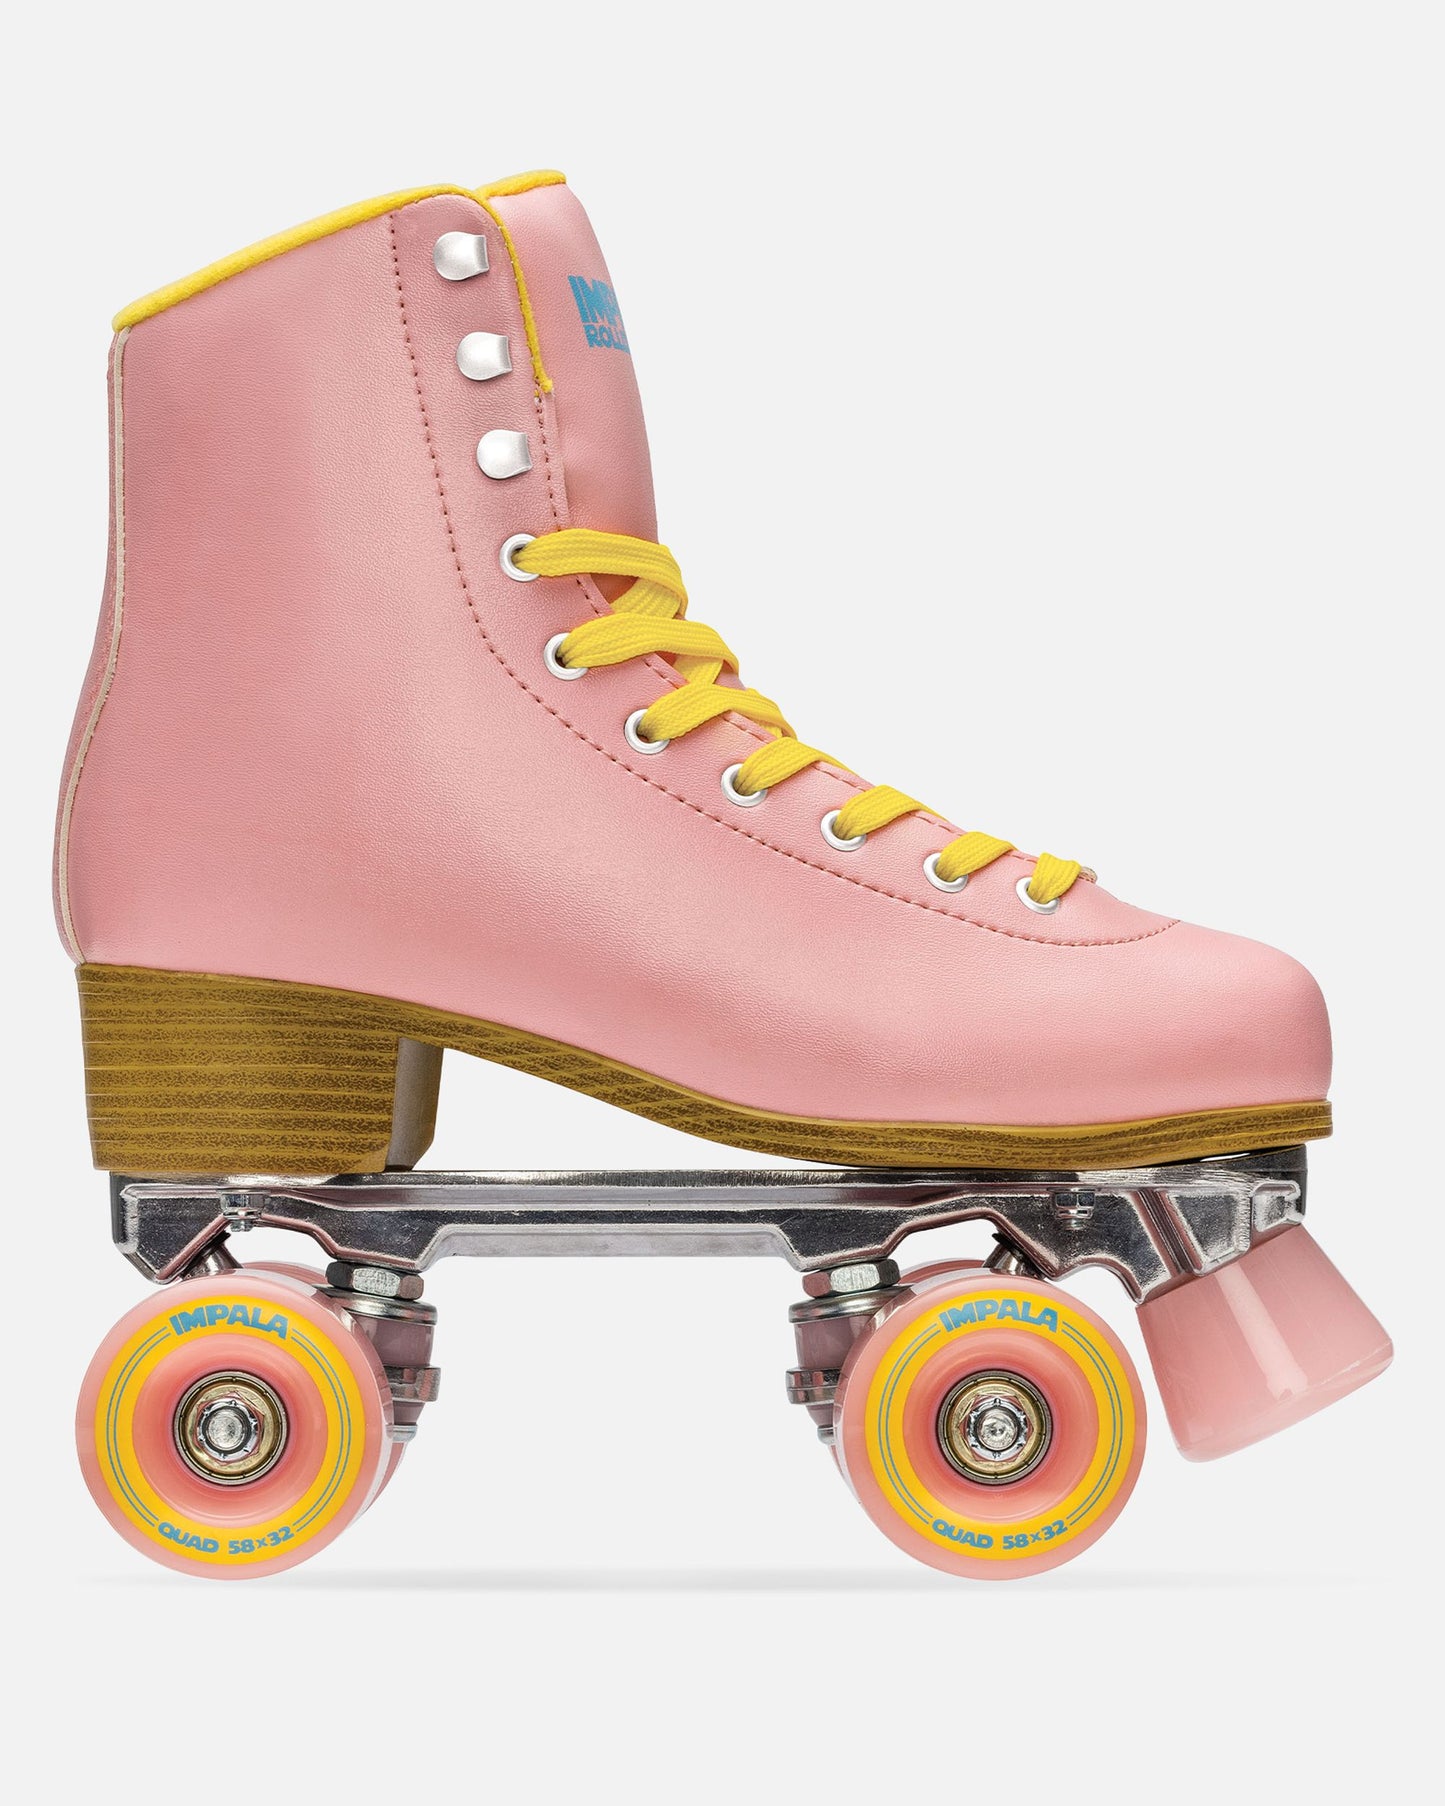 Side profile of Impala Quad Skate - Pink/Yellow